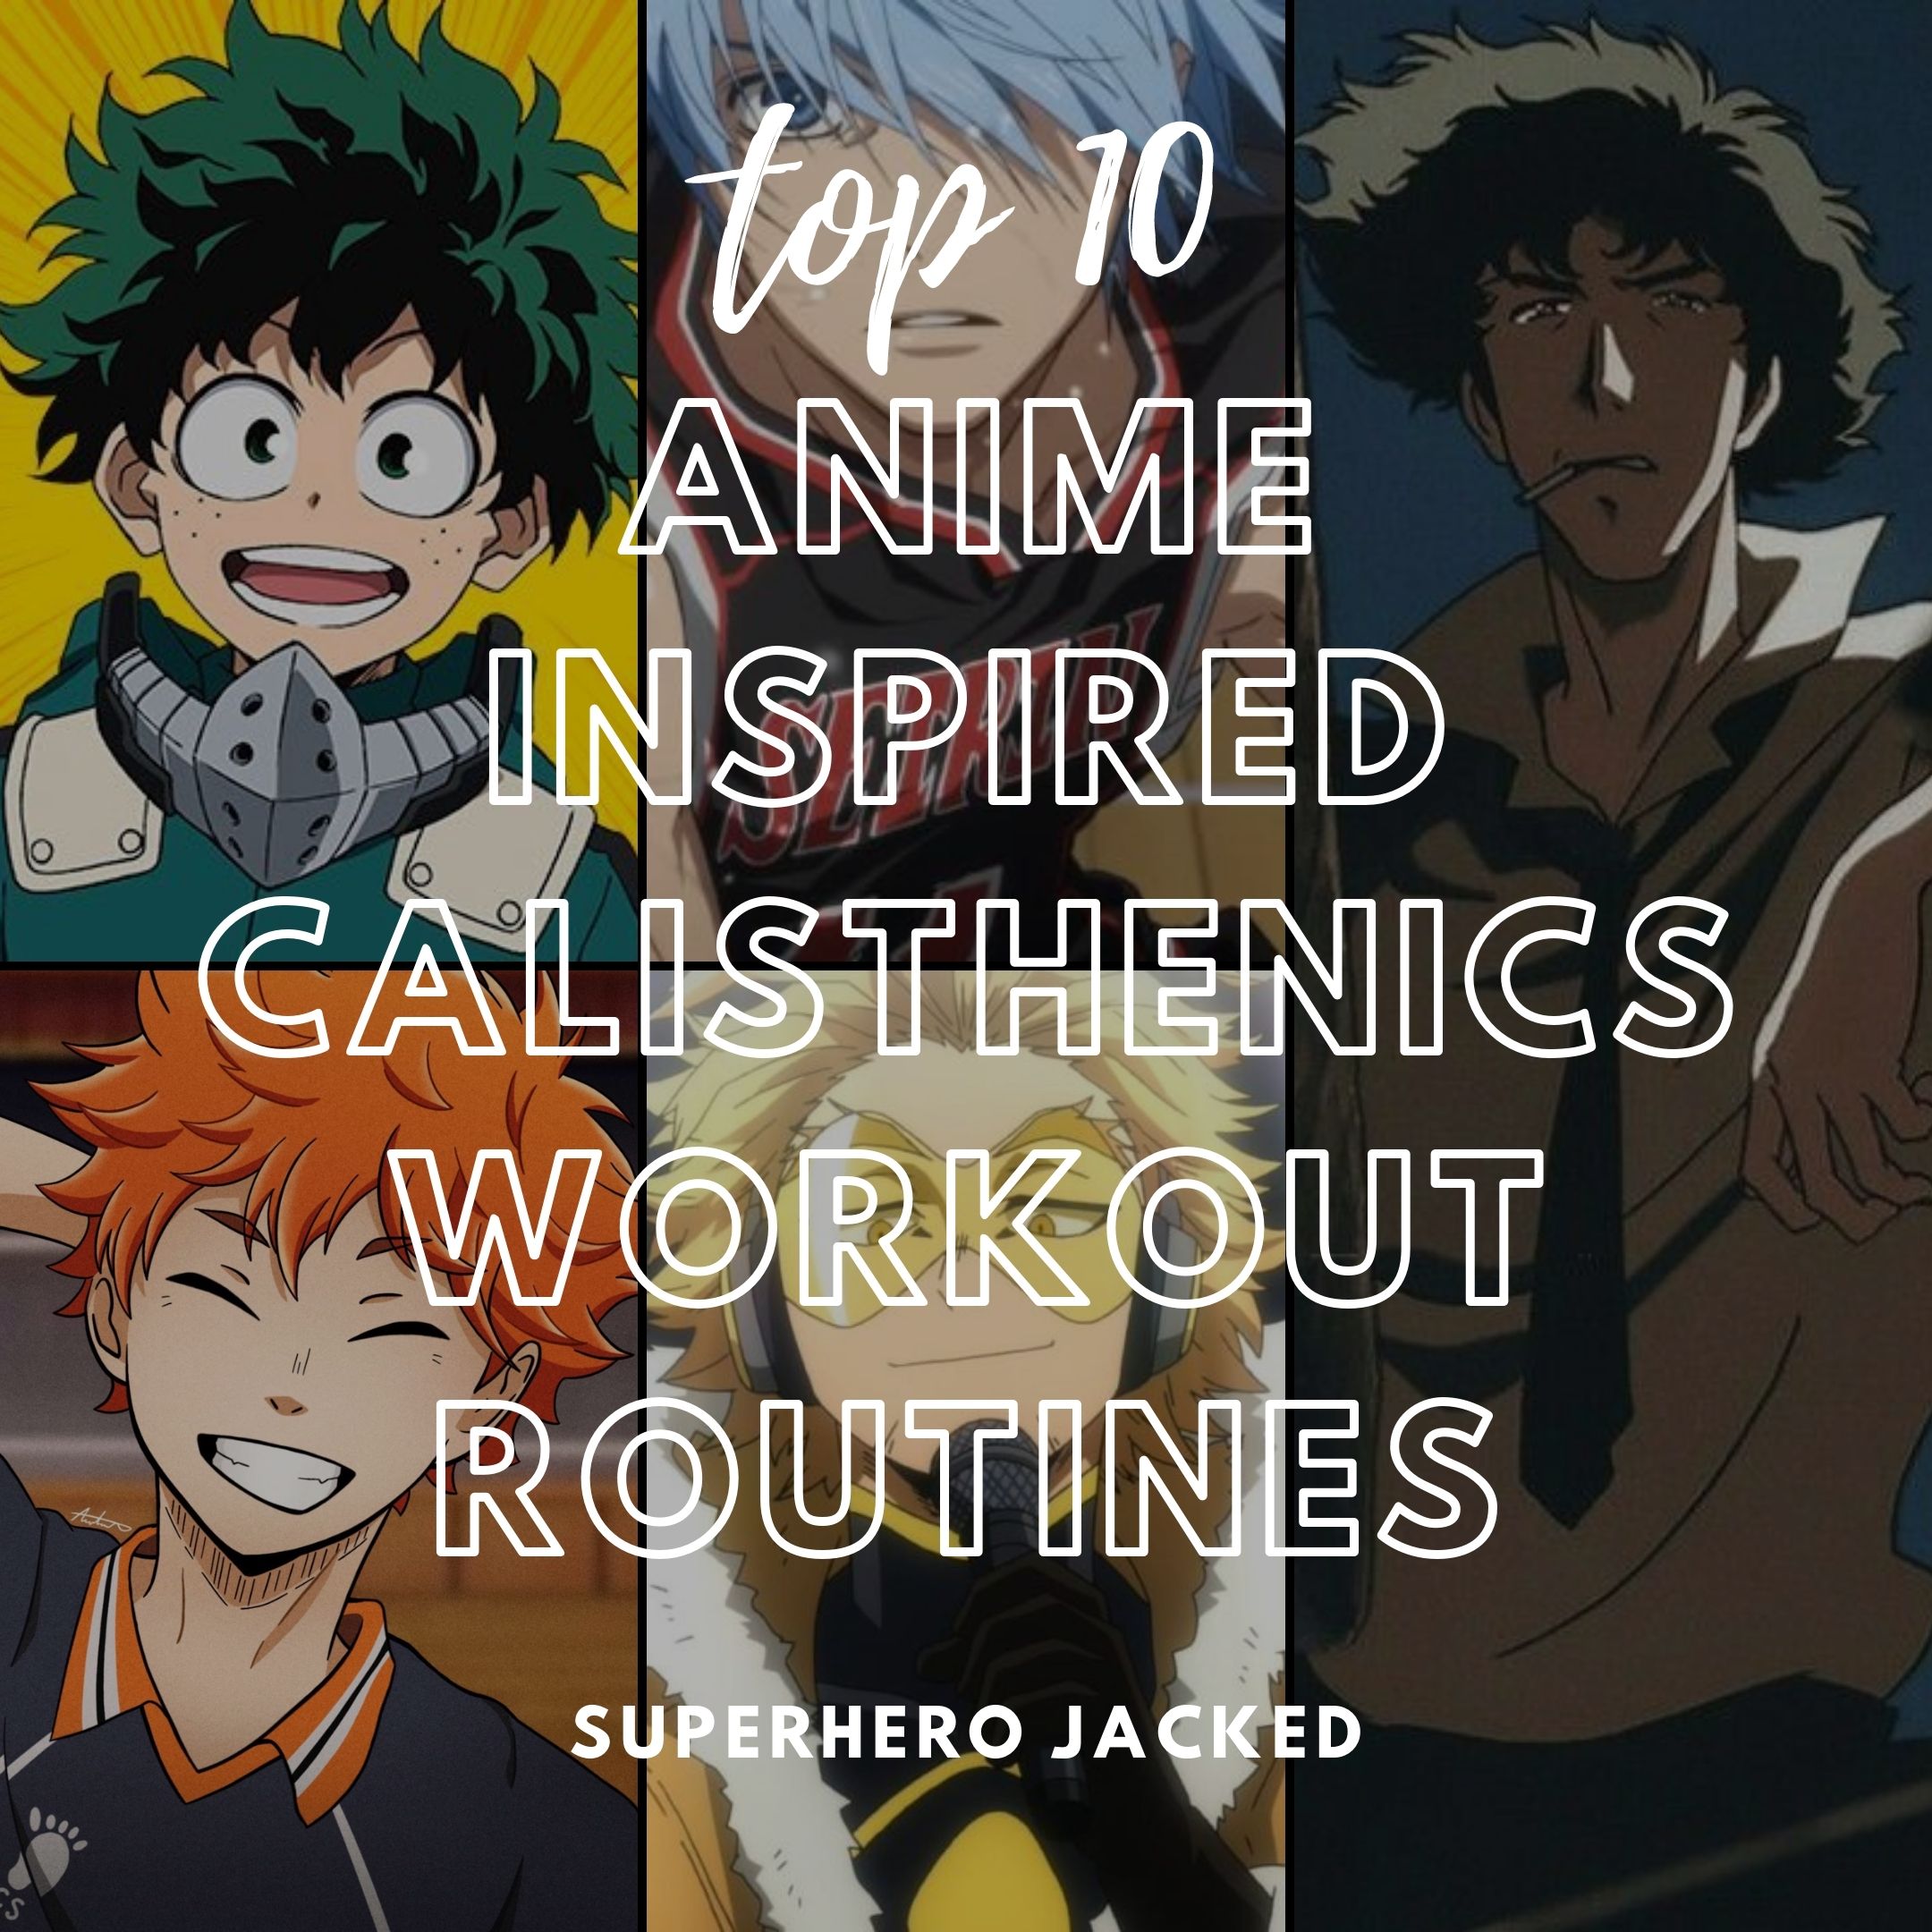 Anime Workout Program | Train like your favorite anime characters